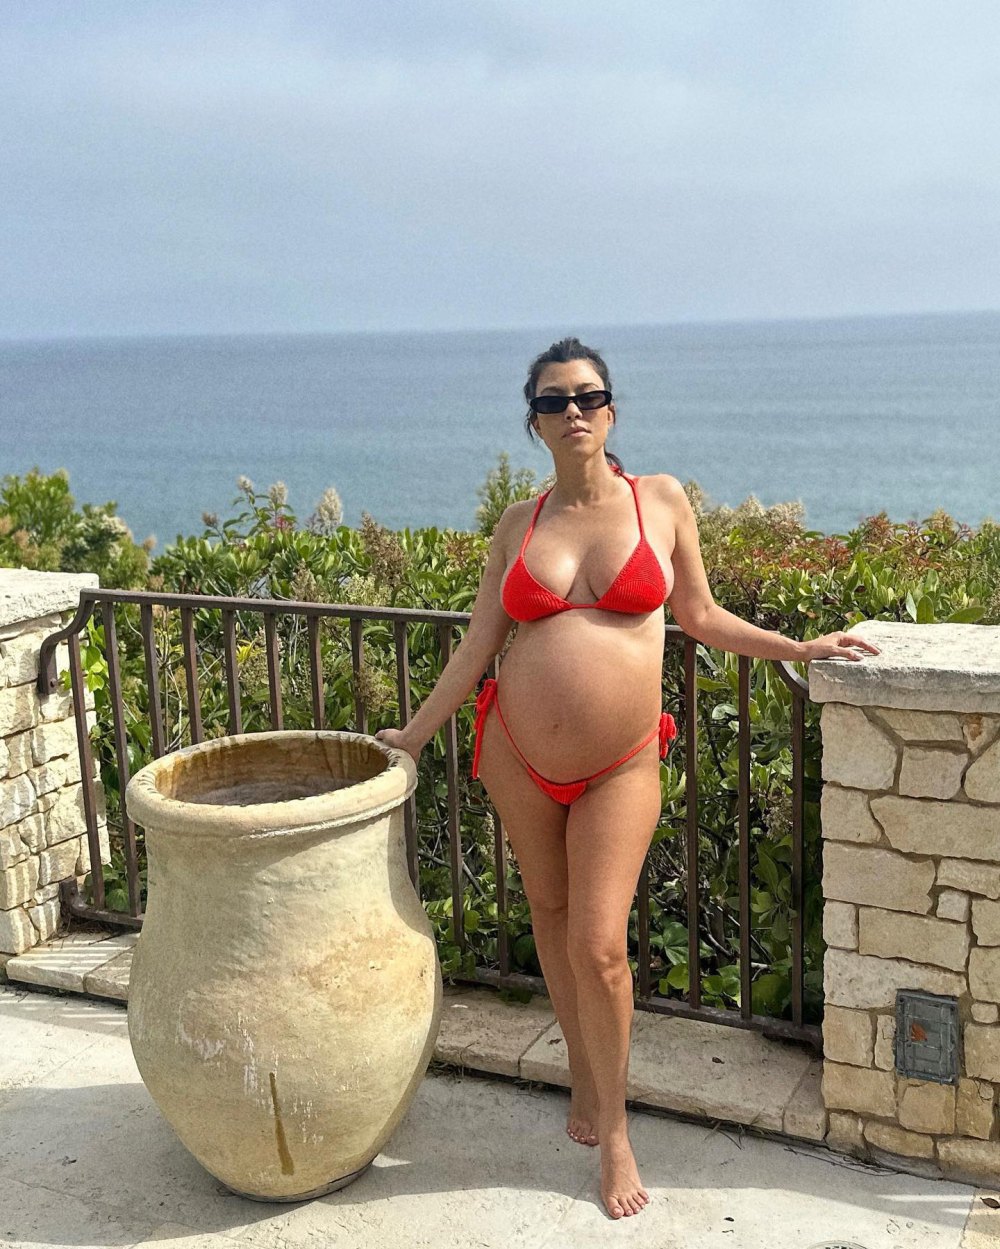 Kourtney Kardashian Had Restrictions During Natural 4th Pregnancy